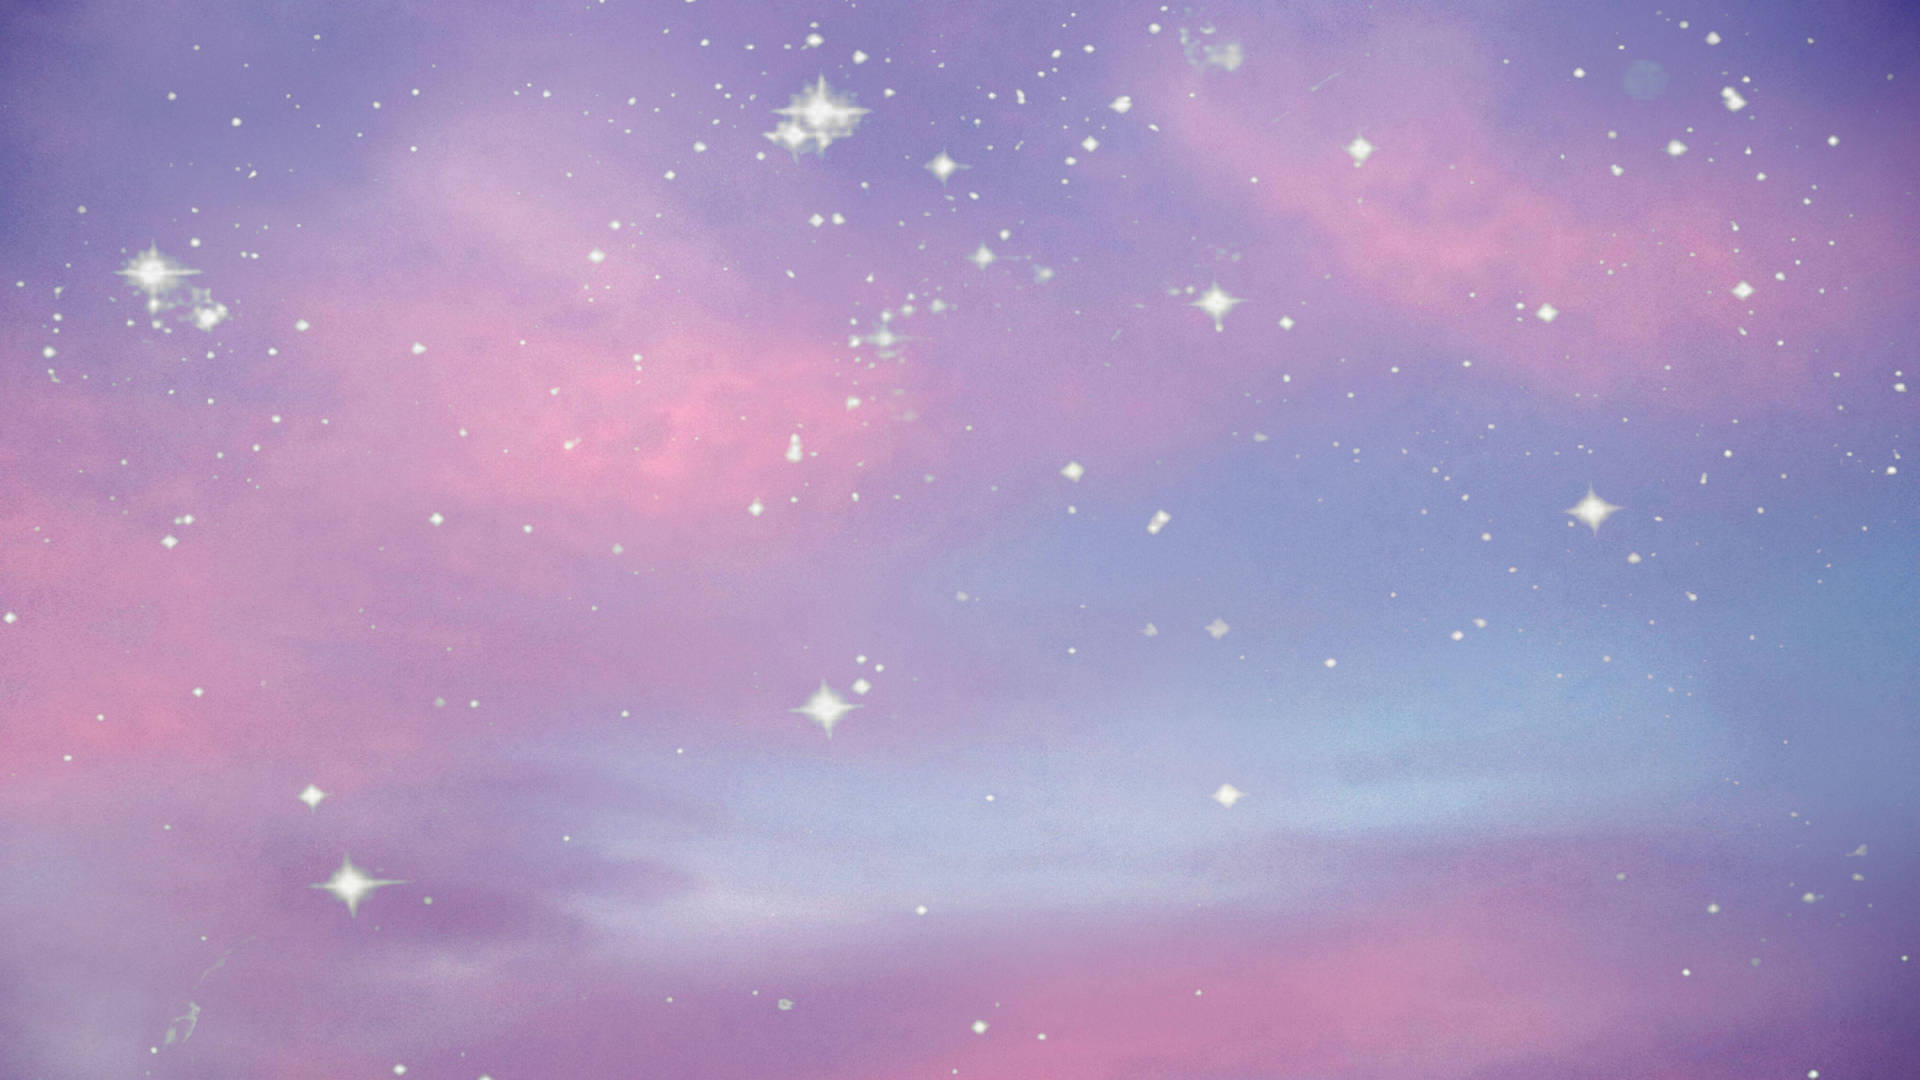 Download Starry Lavender Sky Wallpaper | Wallpapers.com